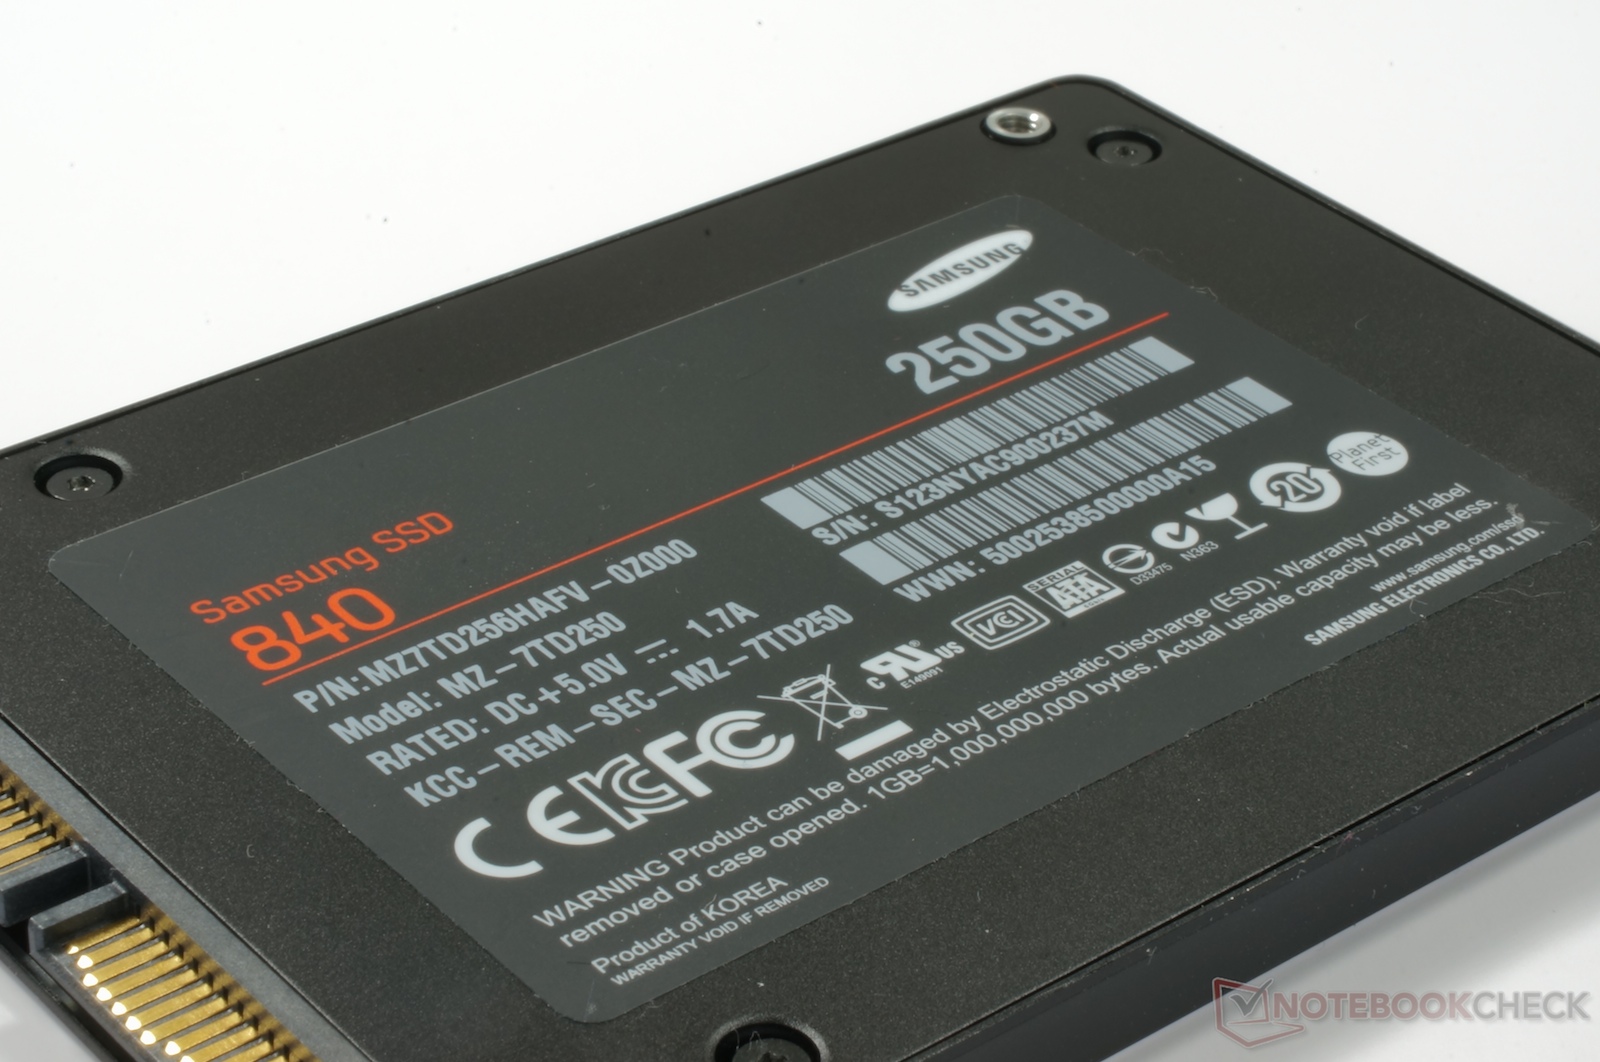 Samsung SSD 840 (250GB) Review